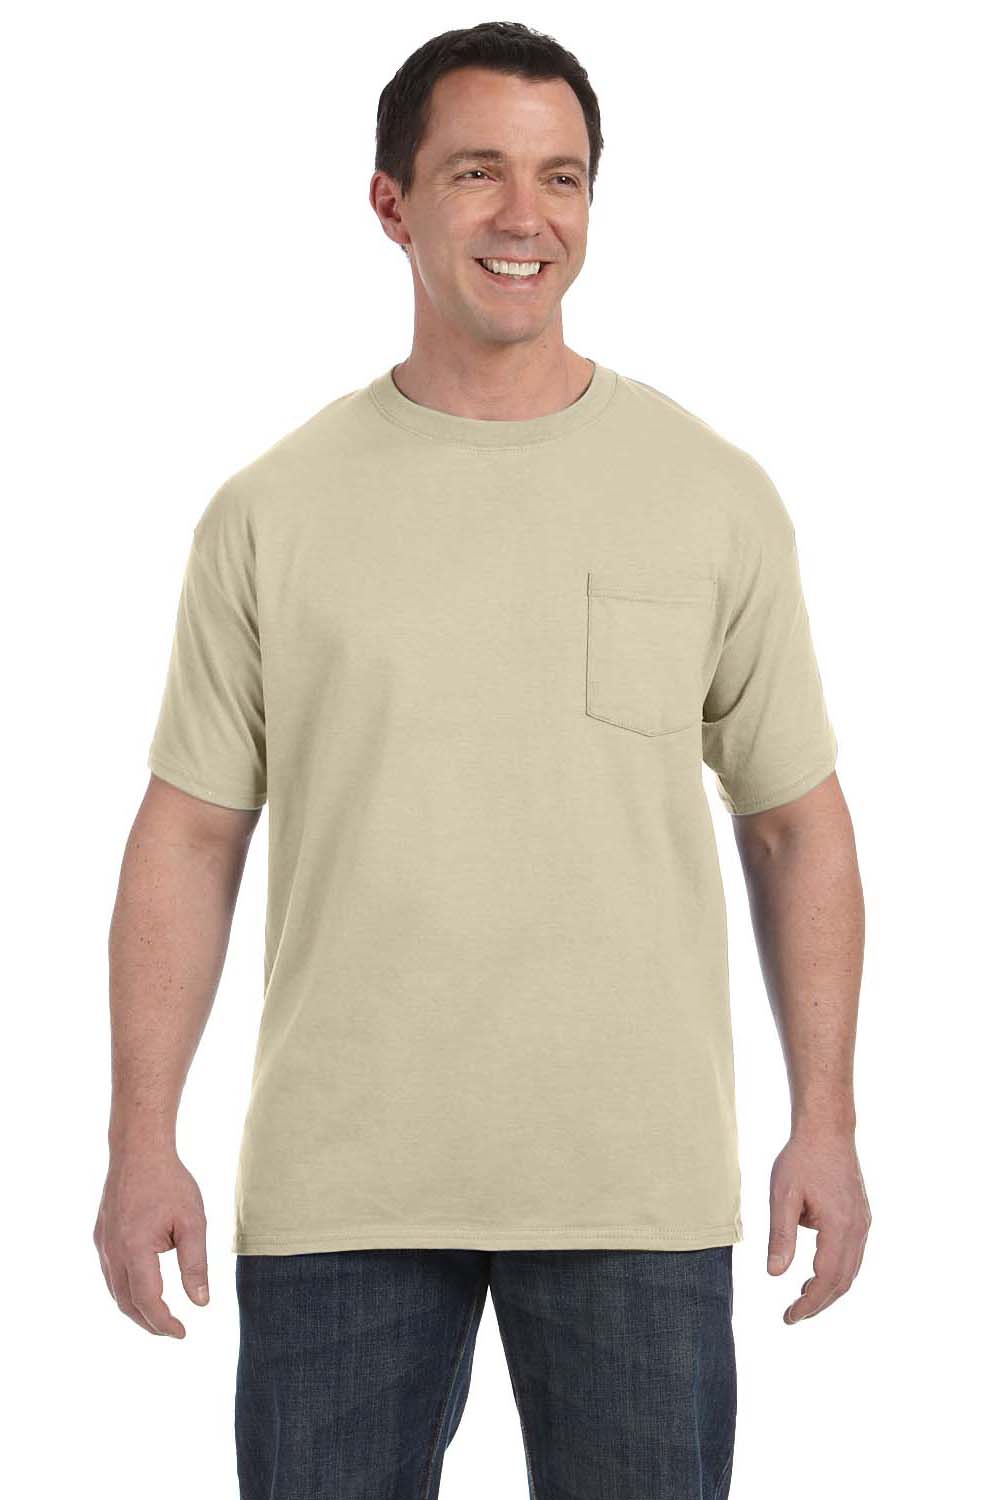 Hanes H5590 Mens ComfortSoft Short Sleeve Crewneck T-Shirt w/ Pocket Sand Brown Front